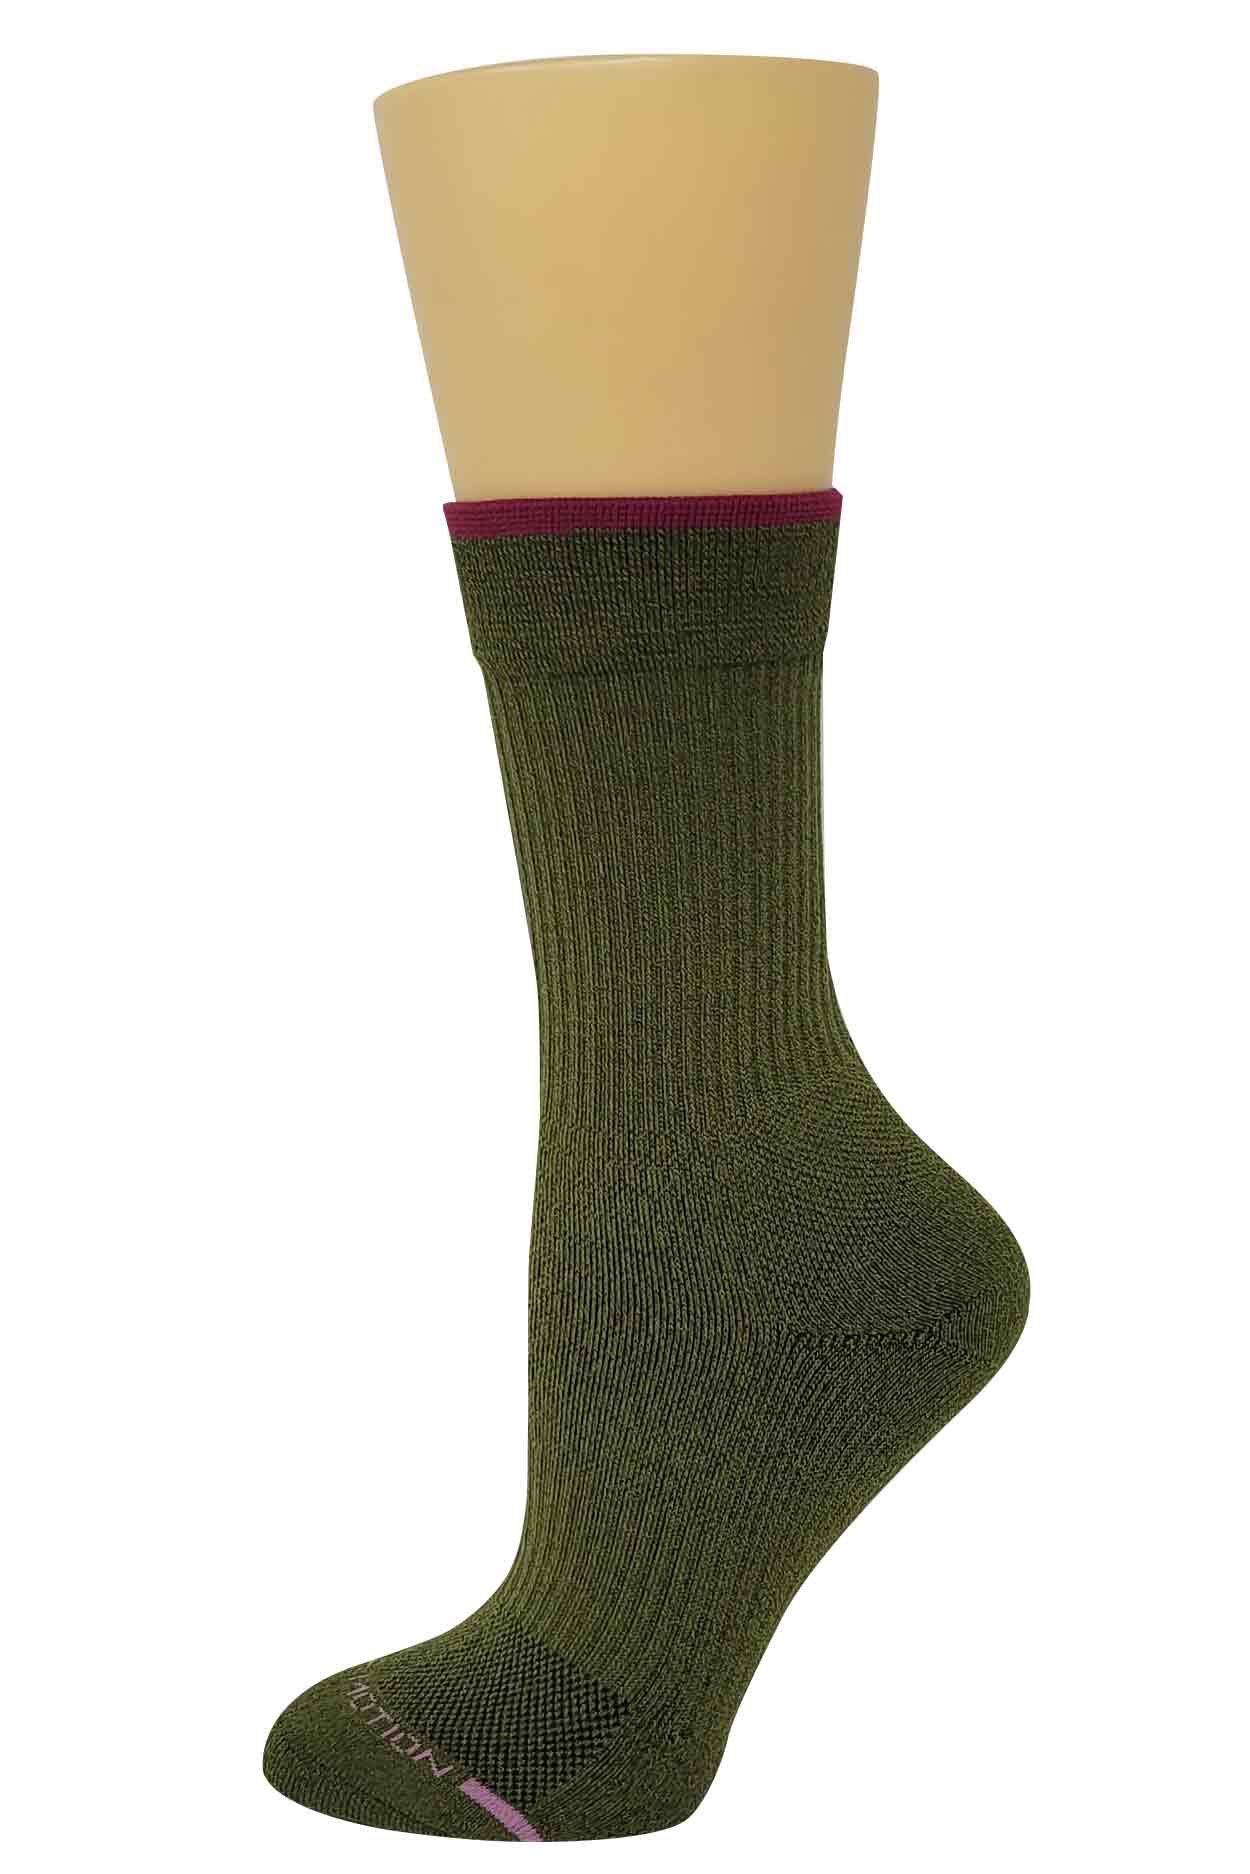 Crew Compression  Socks for Women